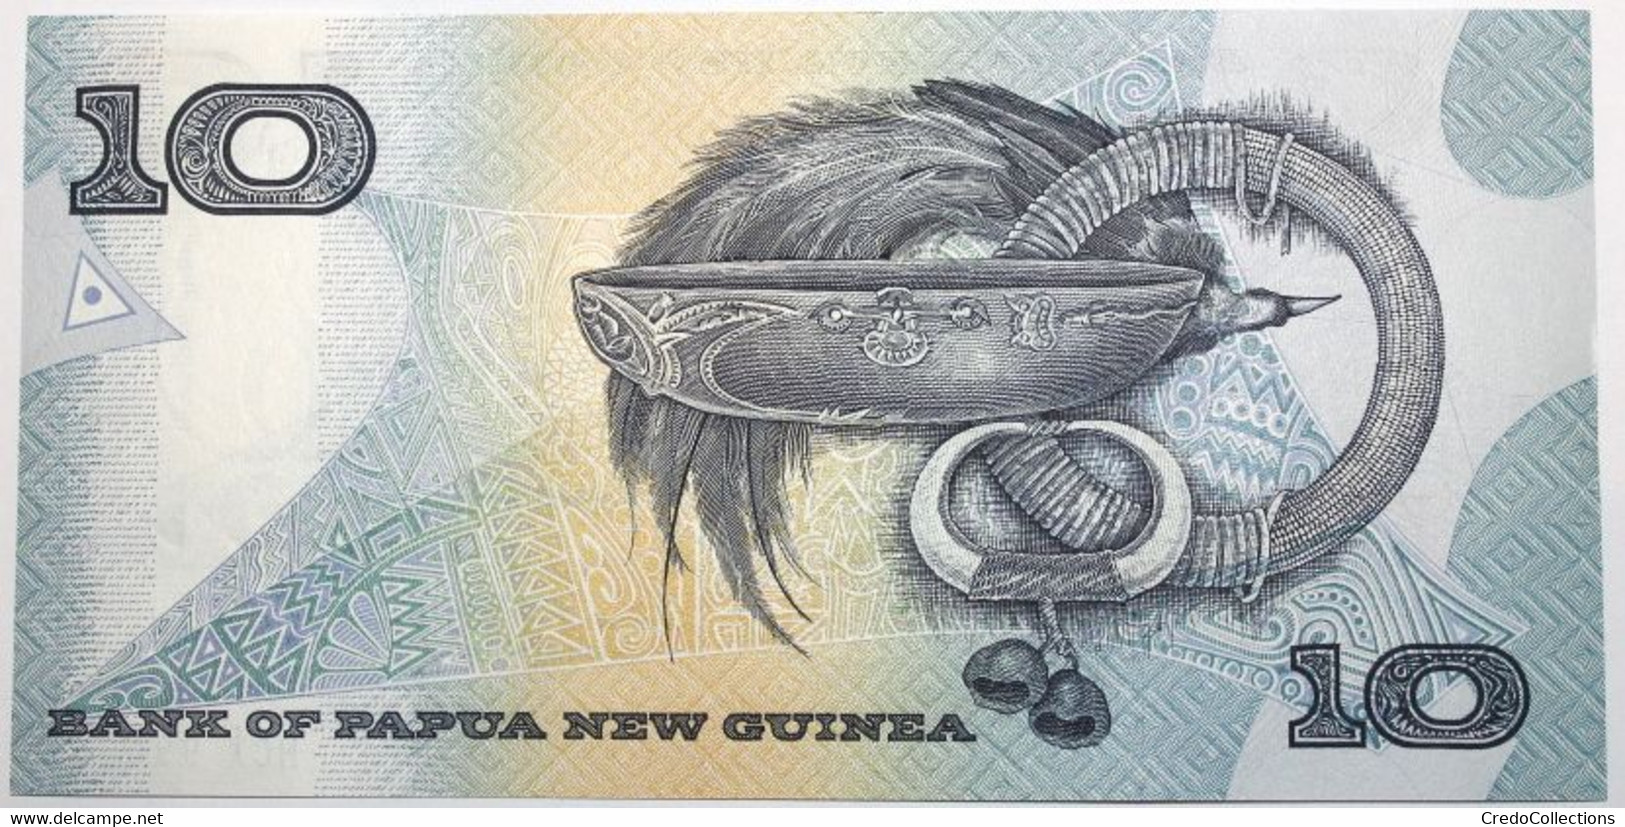 Papouasie-Nouvelle Guinée - 10 Kina - 1995 - PICK 9c - NEUF - Papua New Guinea